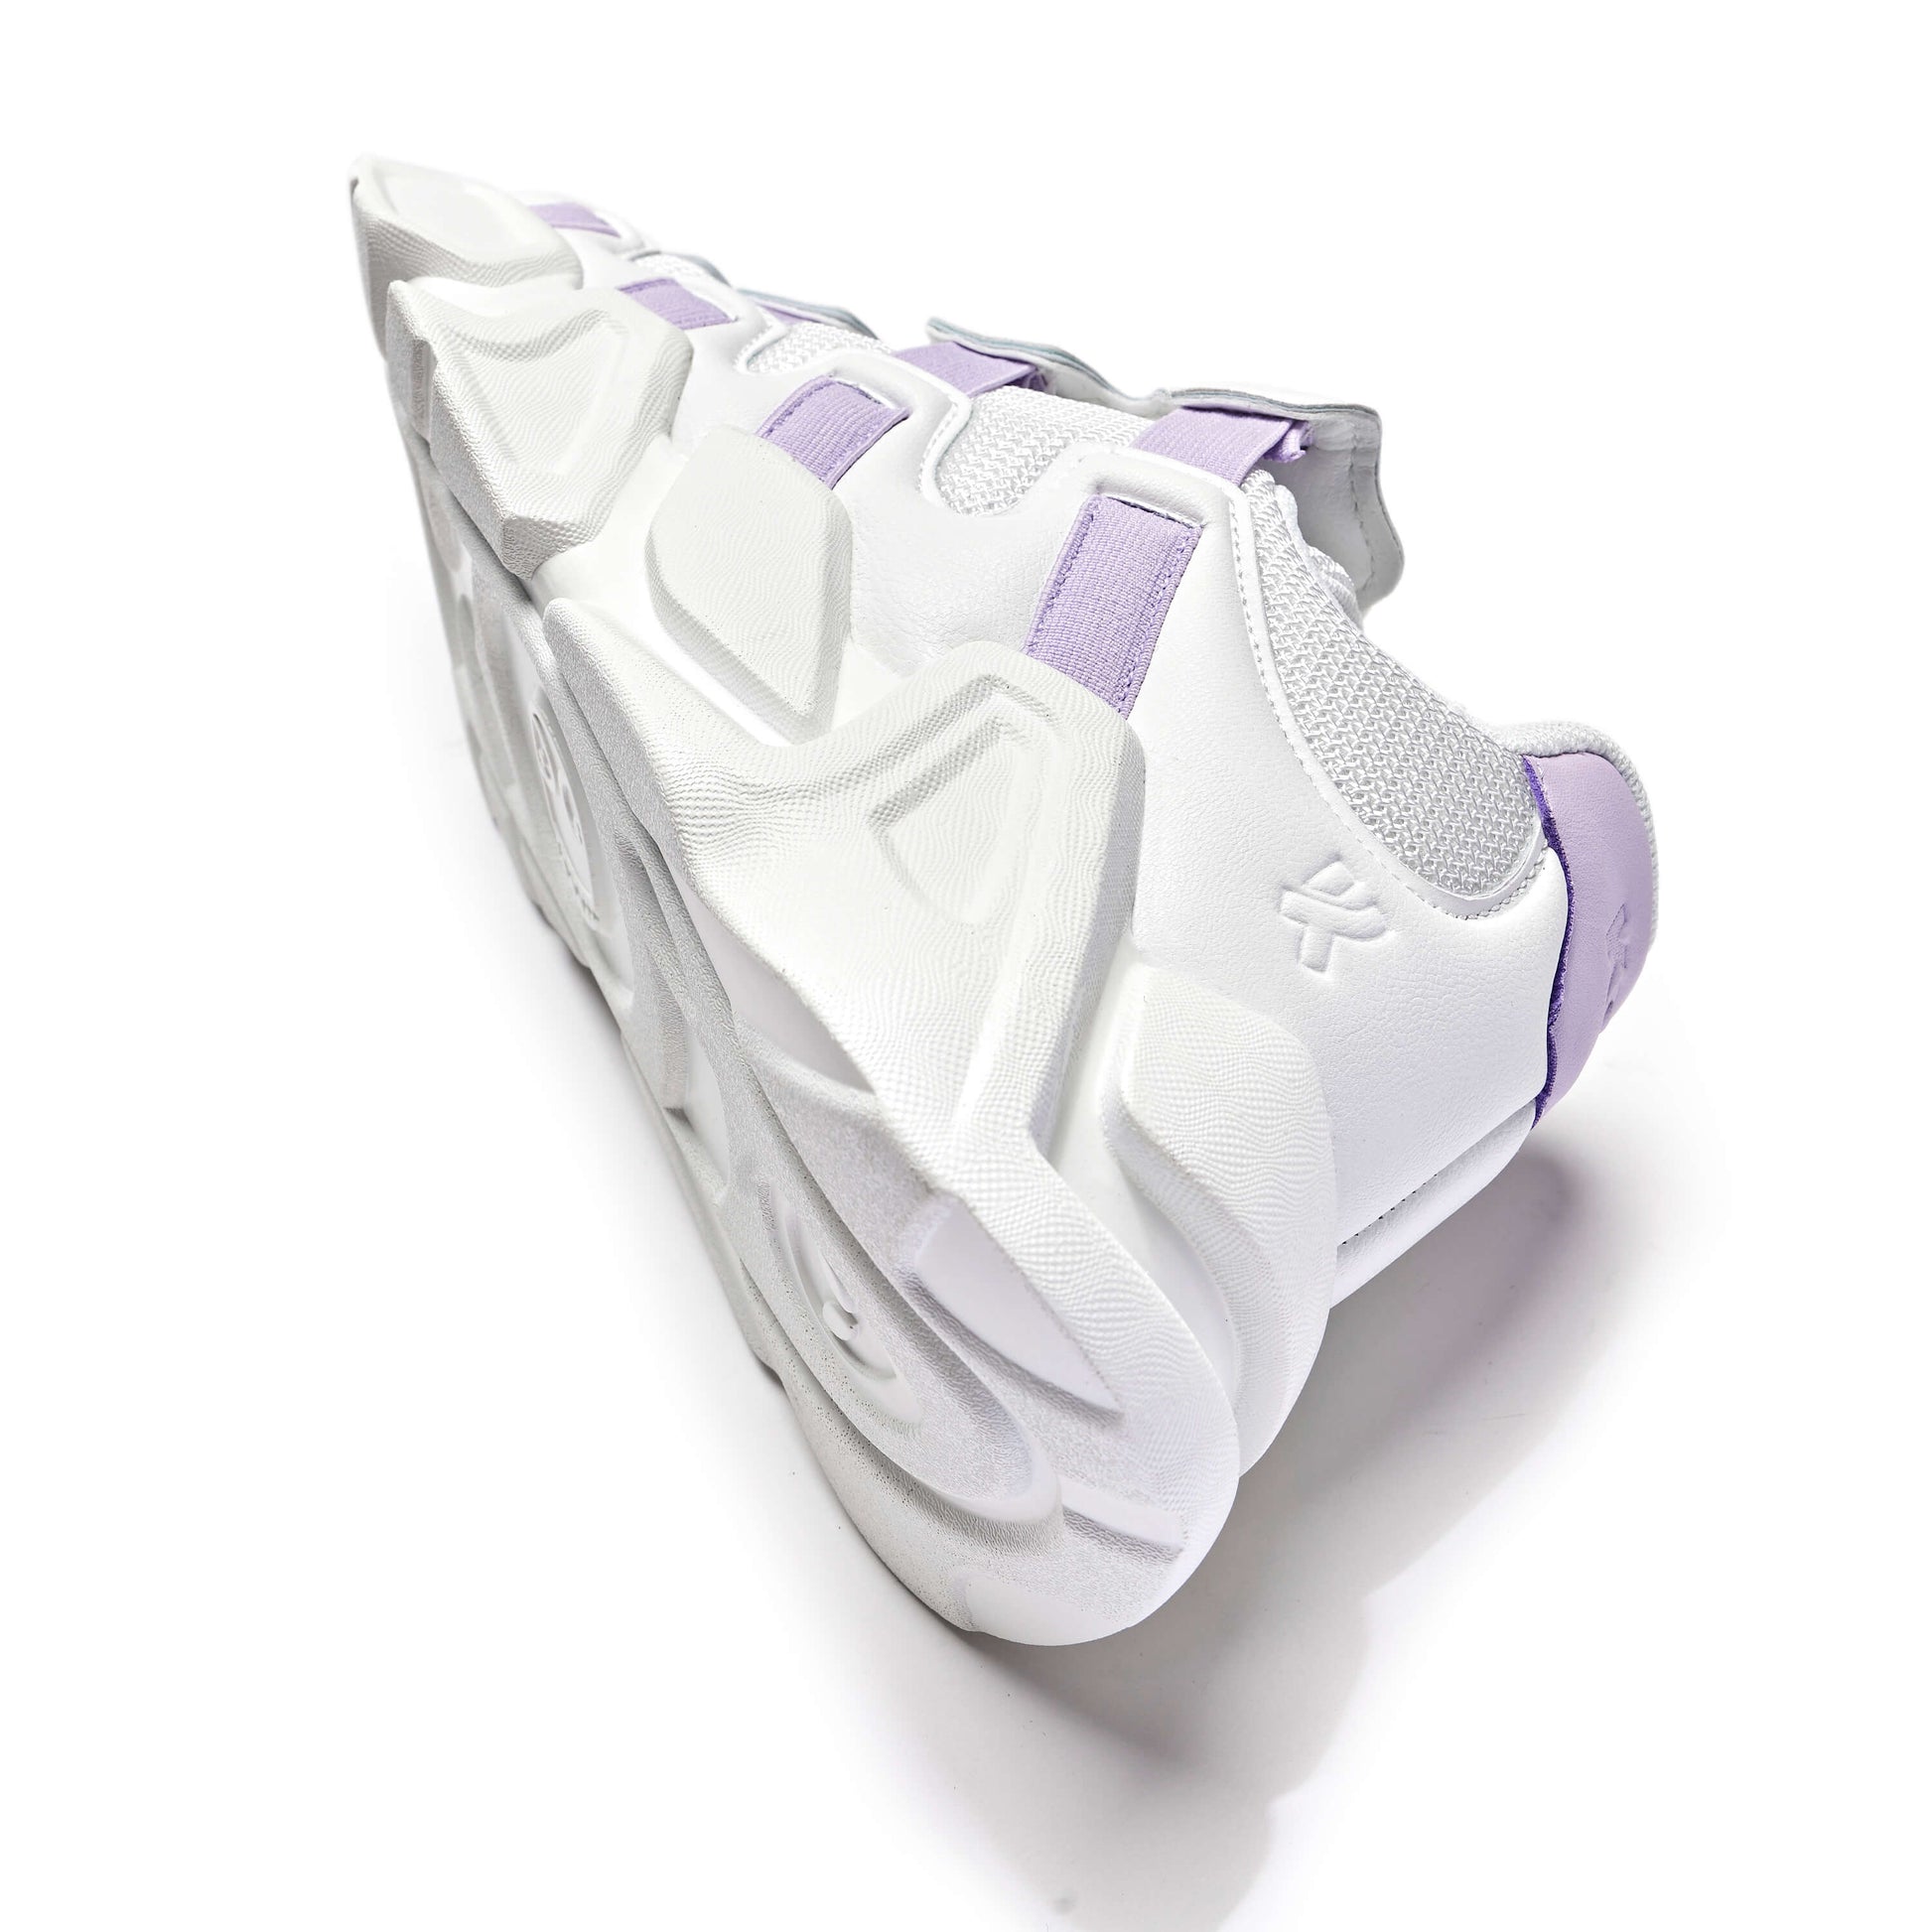 Lavender Sugar Beast Trainers - Trainers - KOI Footwear - White - Back Detail